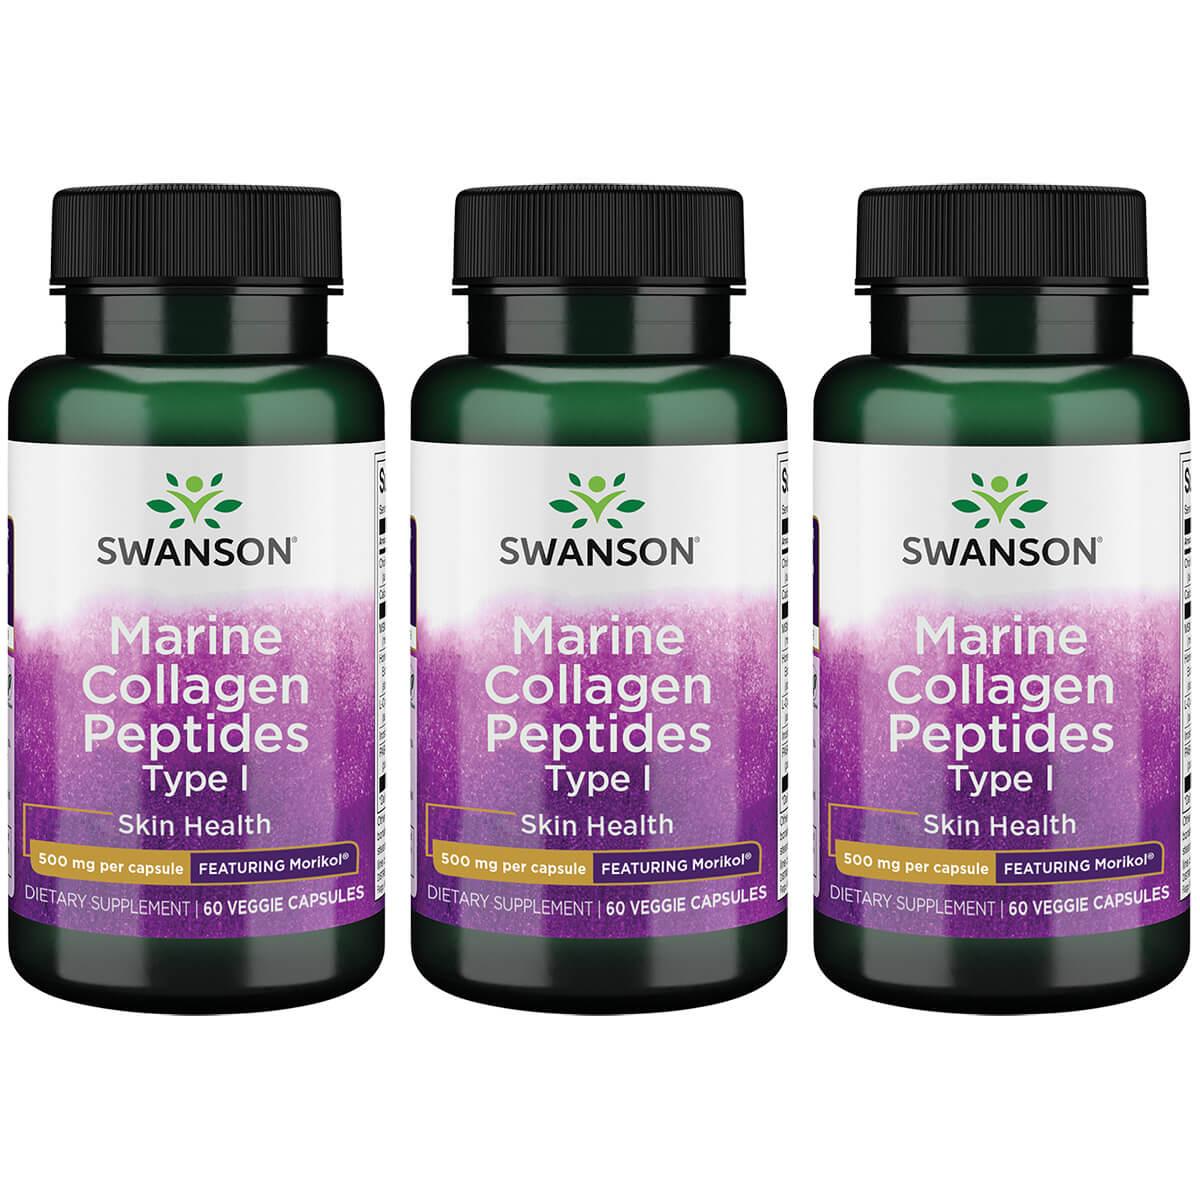 Swanson Premium Marine Collagen Peptides Type I - Featuring Morikol 3 Pack Supplement Vitamin 500 mg 60 Veg Caps